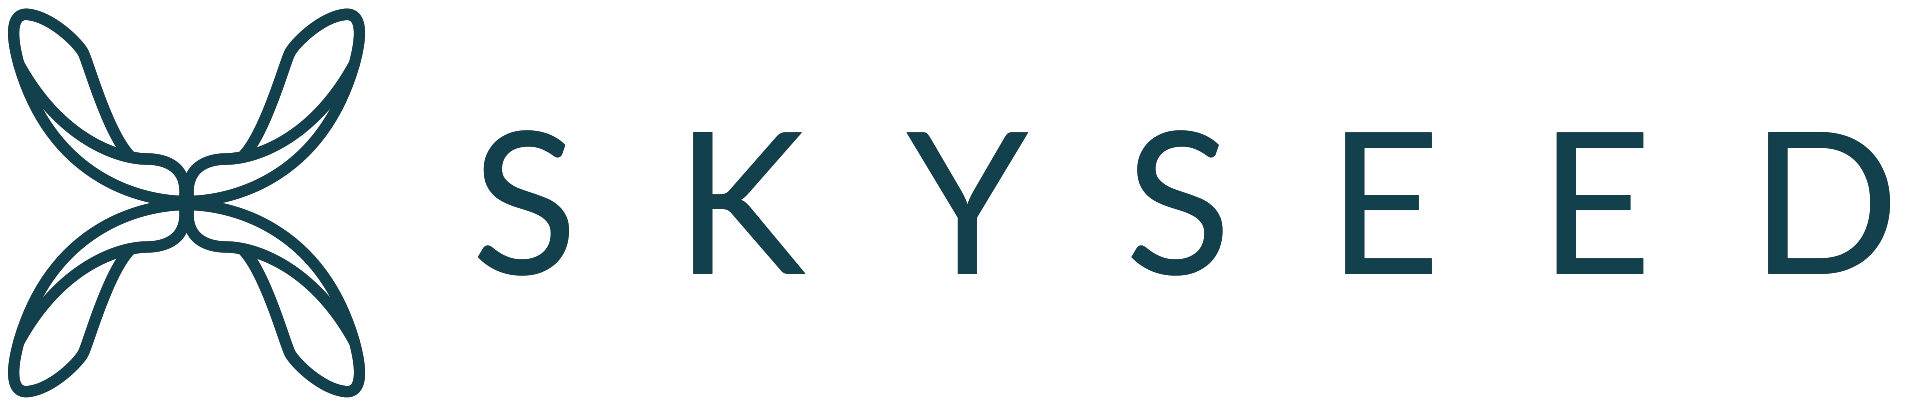 skyseed logo